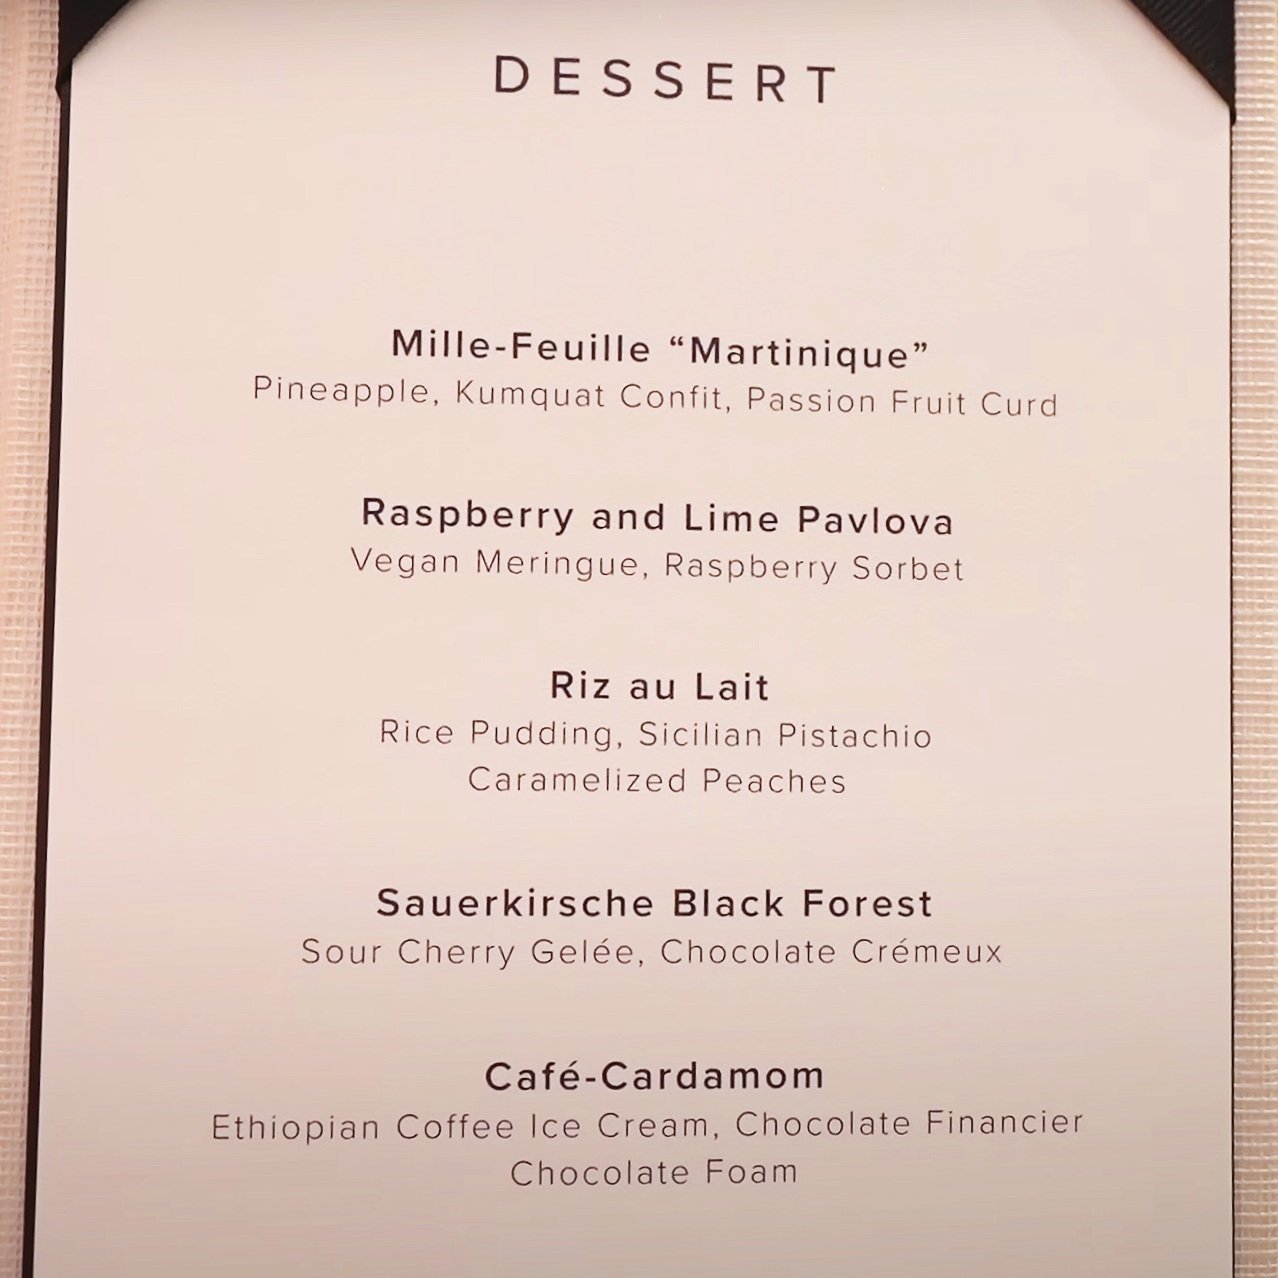  Dessert menu 